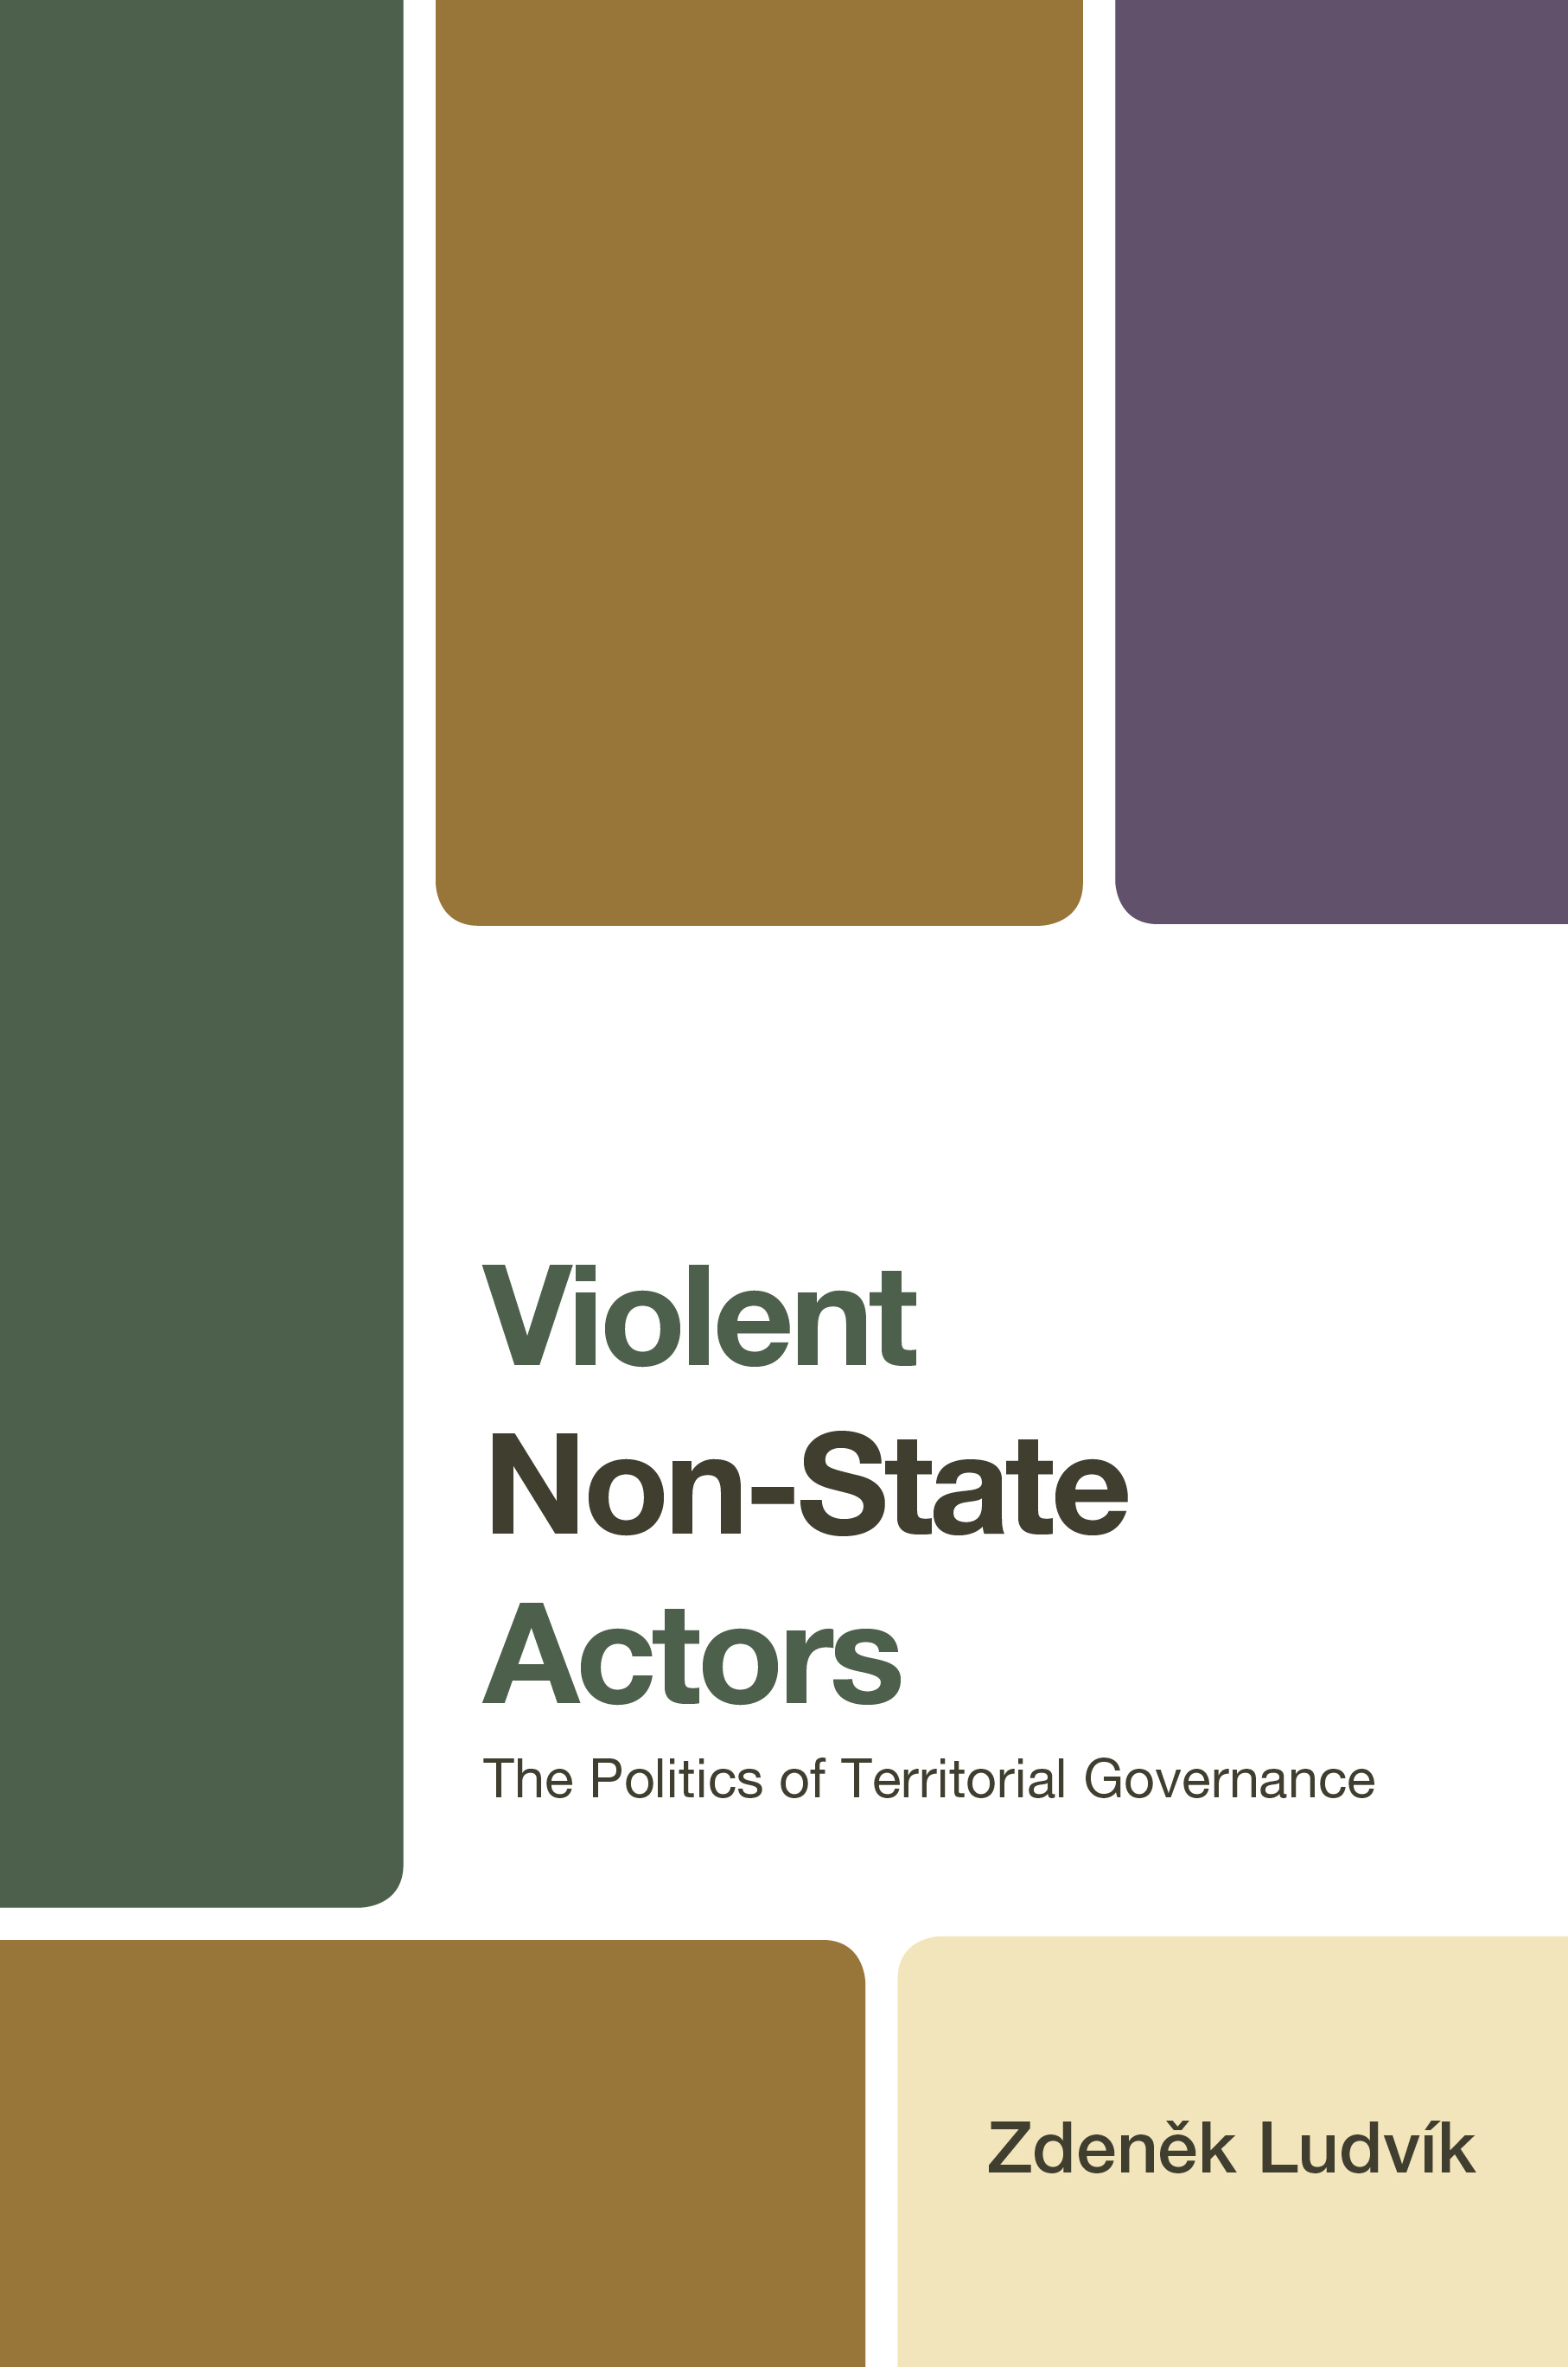 Violent Non-State Actors: The Politics of Territorial Governance